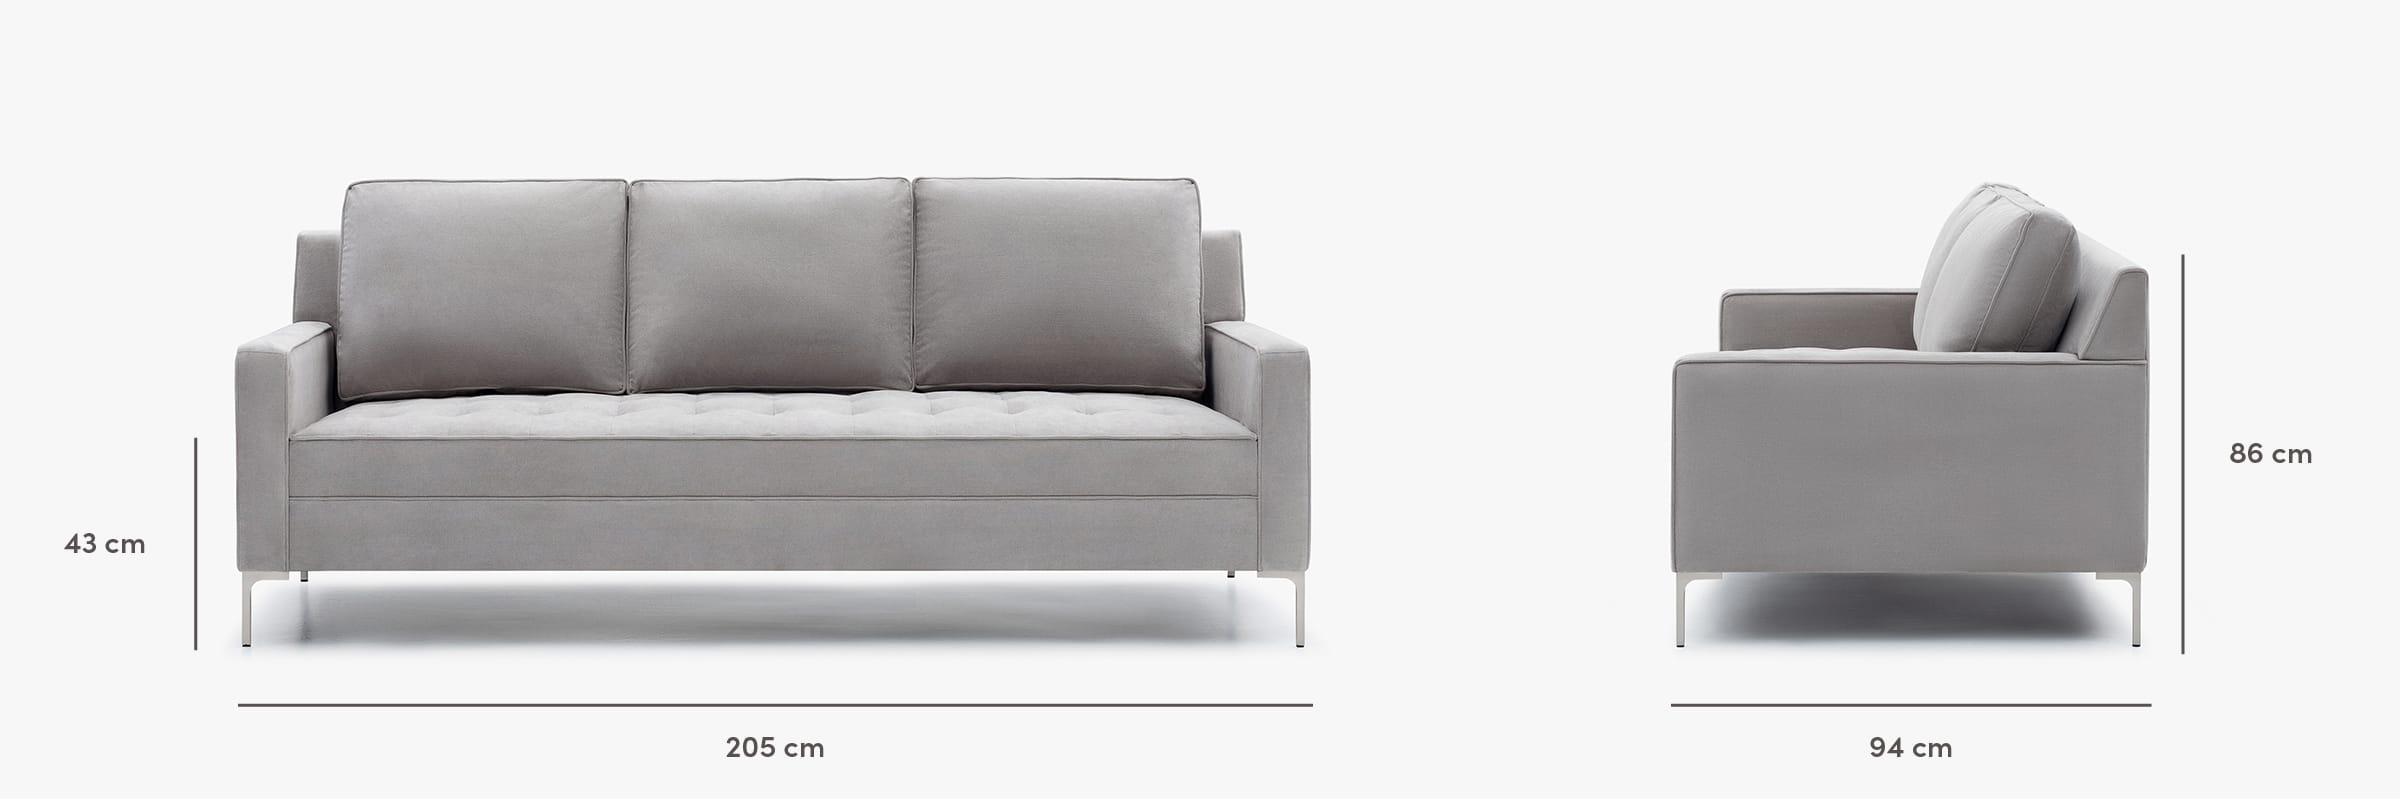 Hudson sofa dimensions